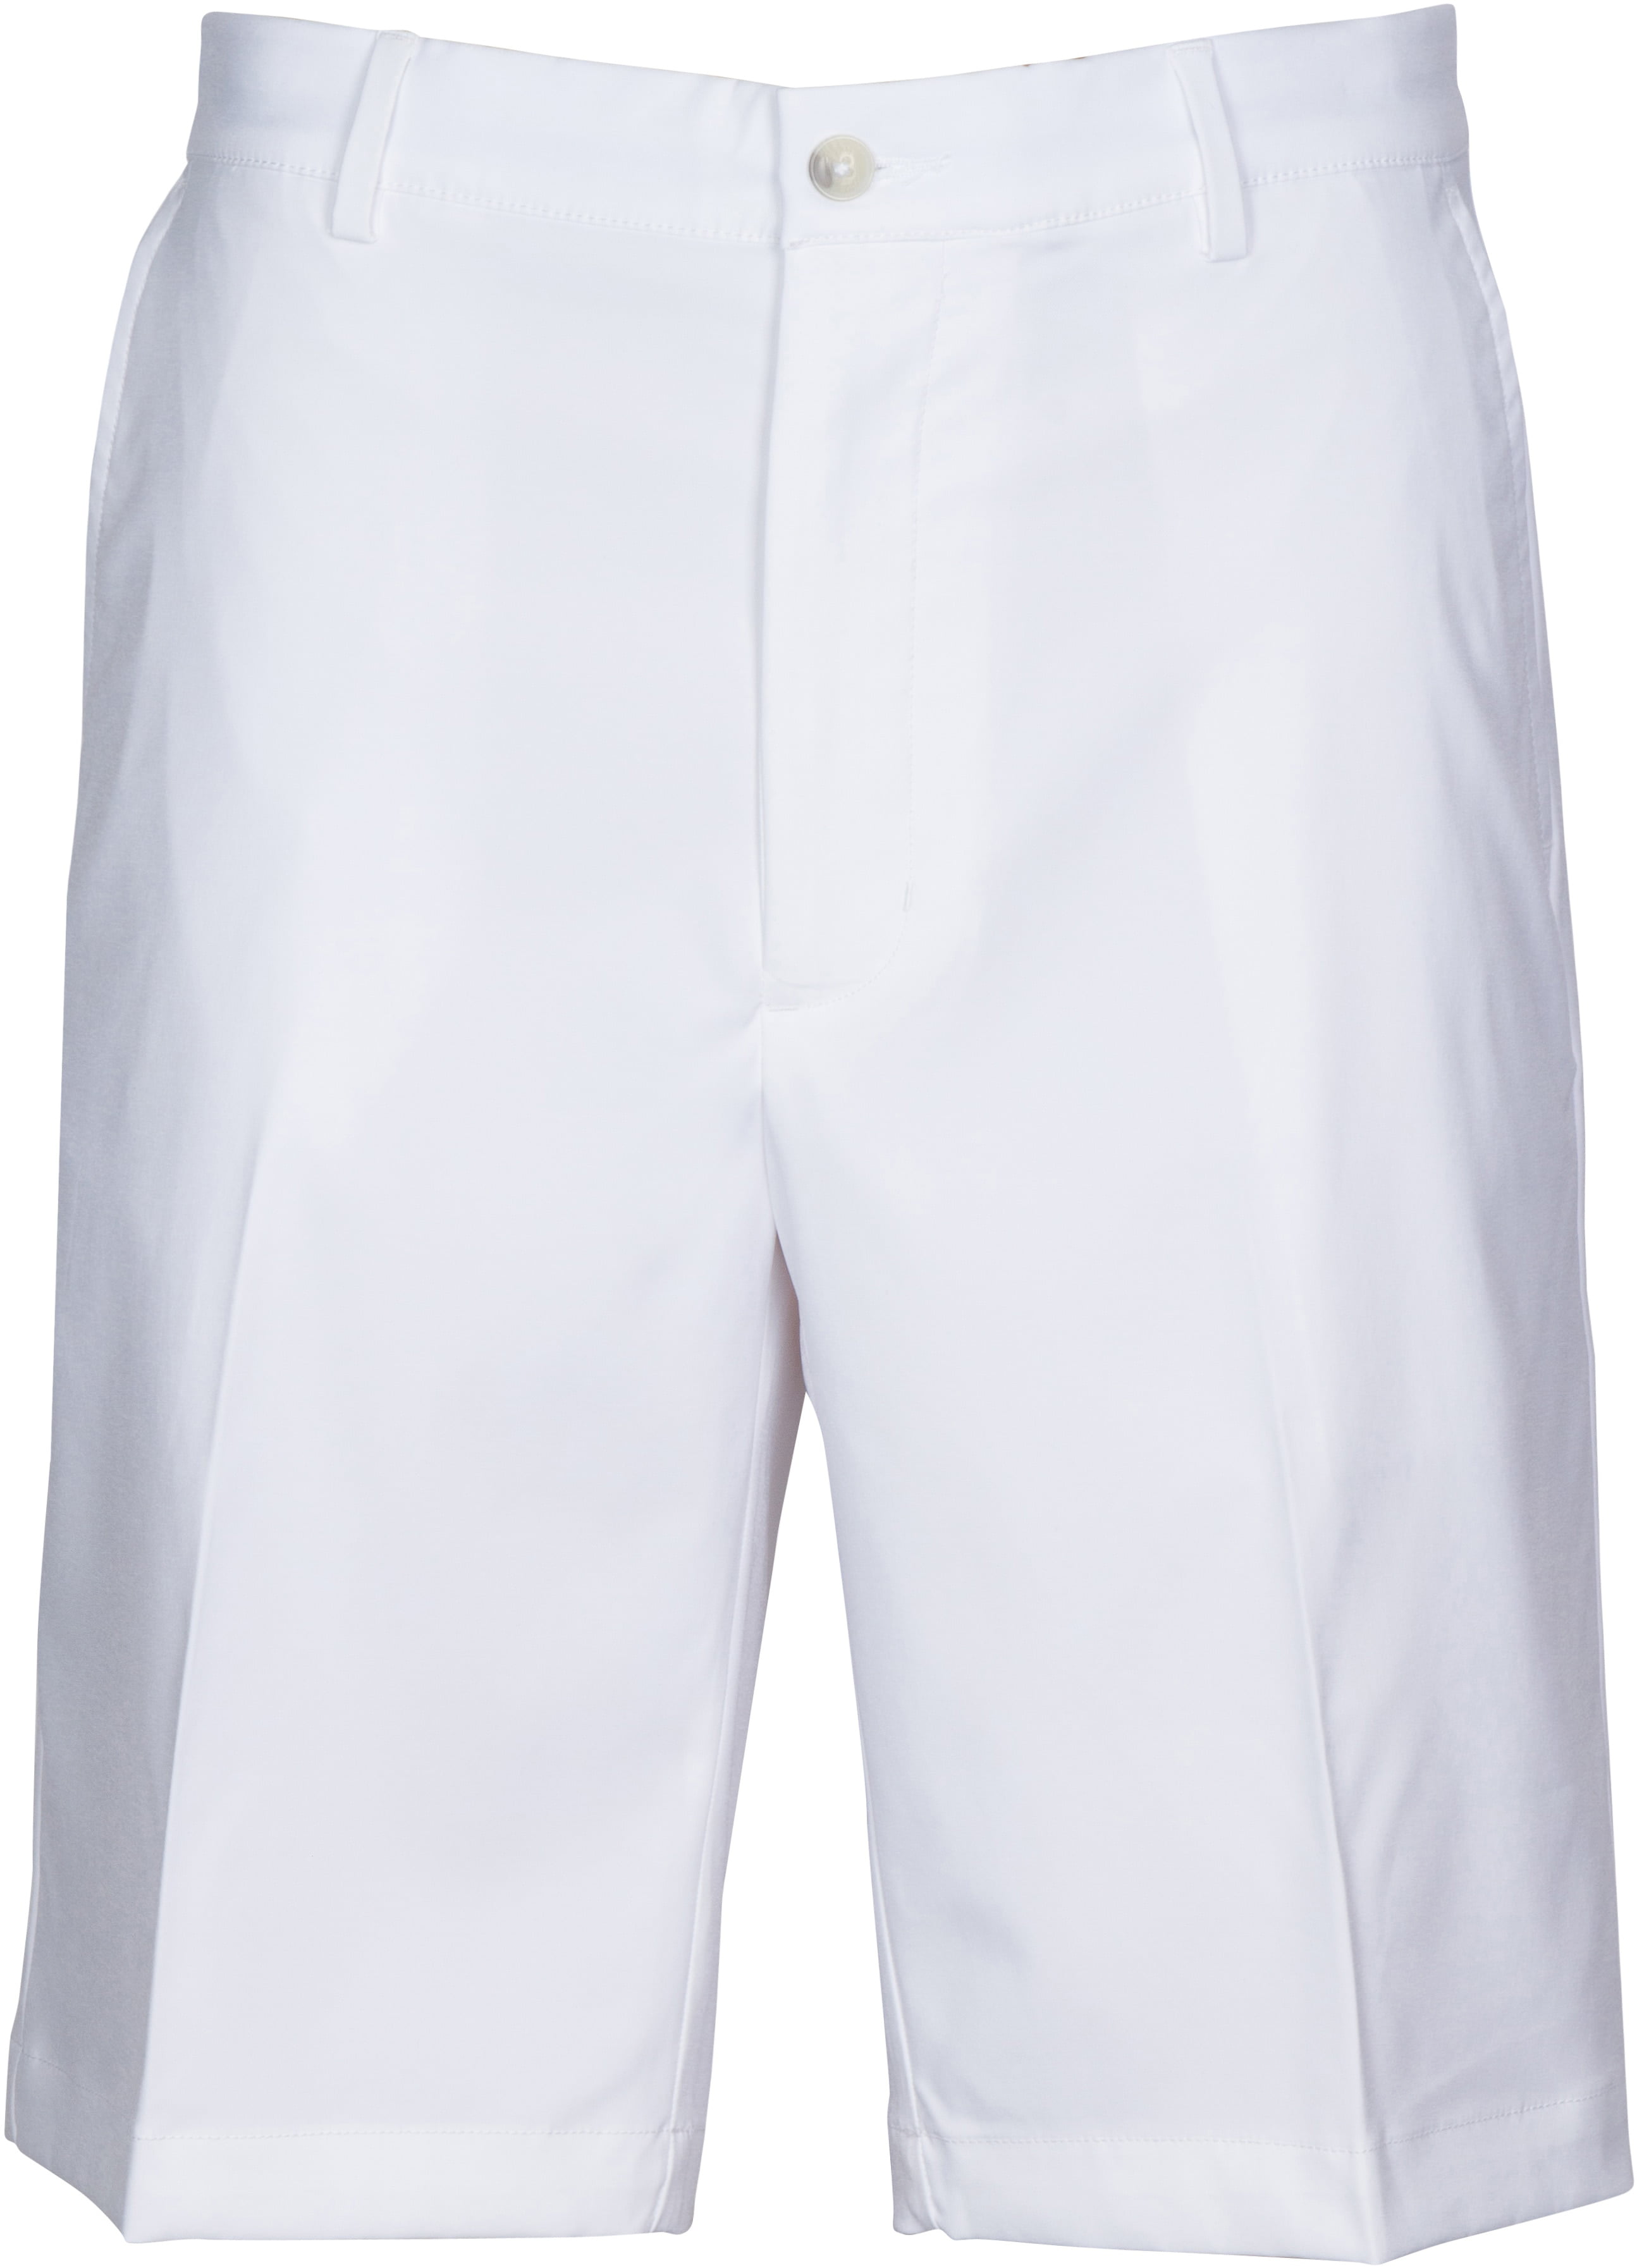 Tourney Men's Solid Tech Flat Front Performance Golf Shorts - Walmart.com